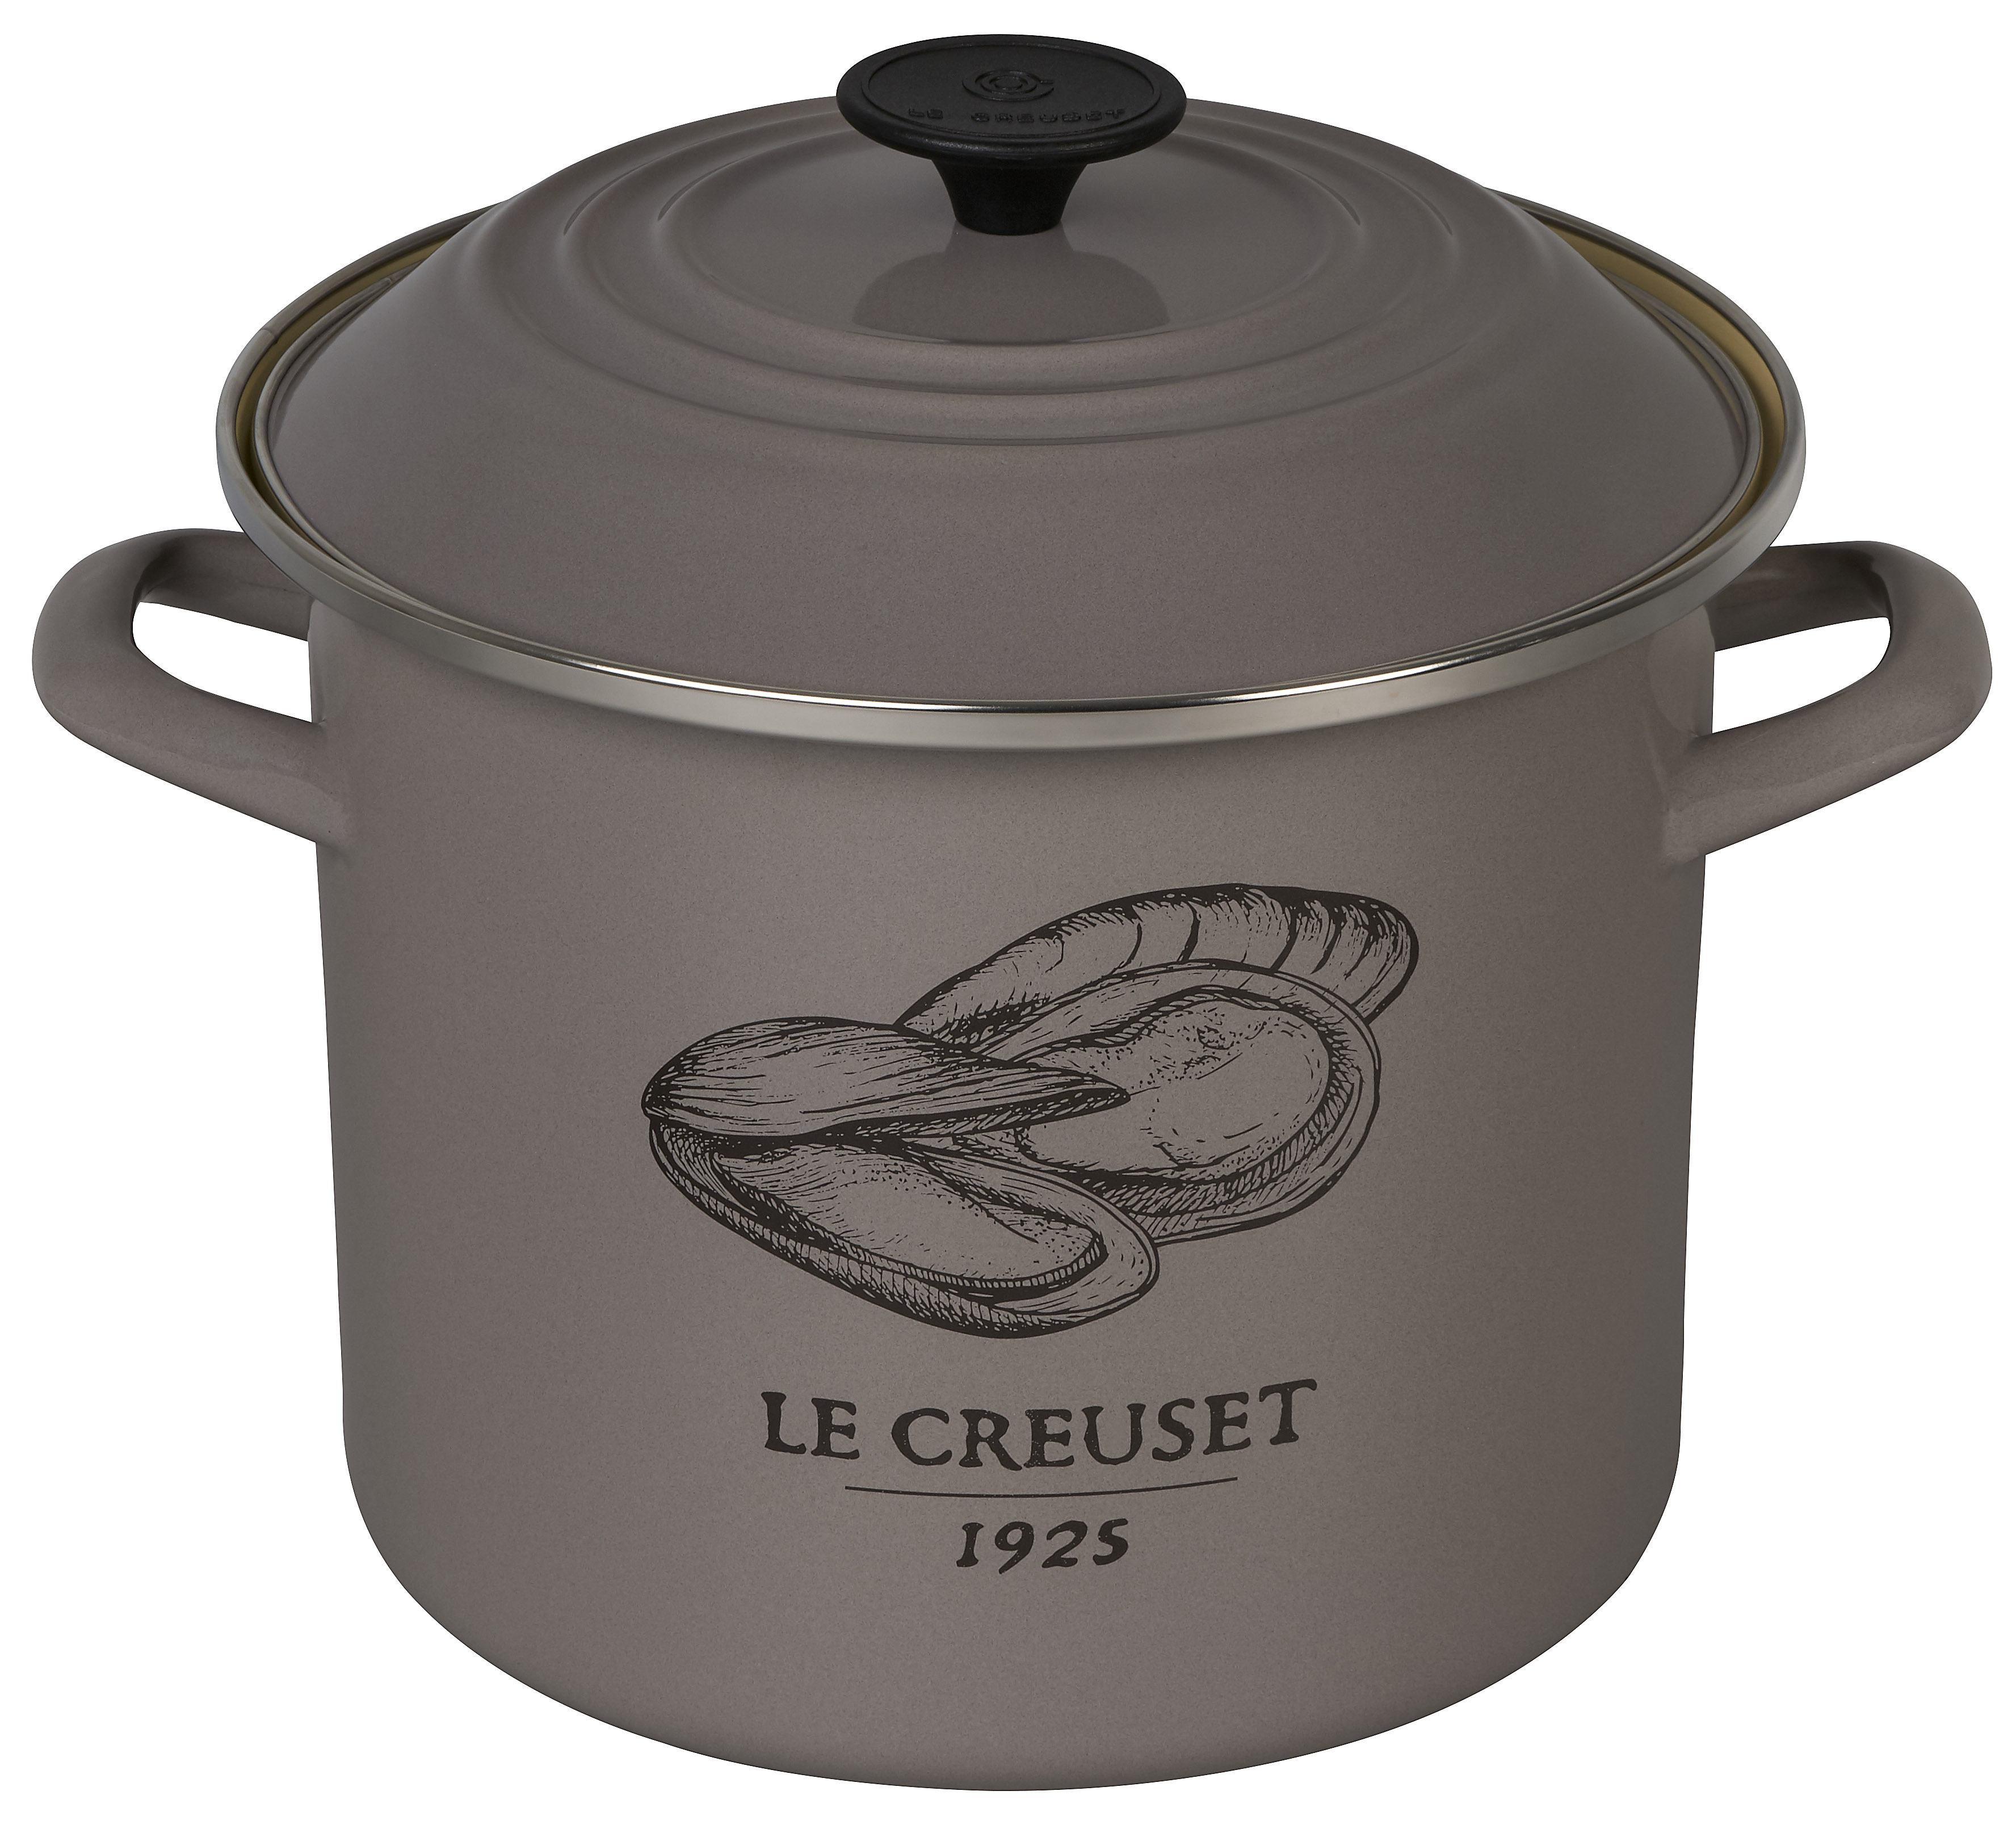 https://www.kitchenwarenews.com/wp-content/uploads/2019/04/Le-Creuset-Mussel-Pot.jpg